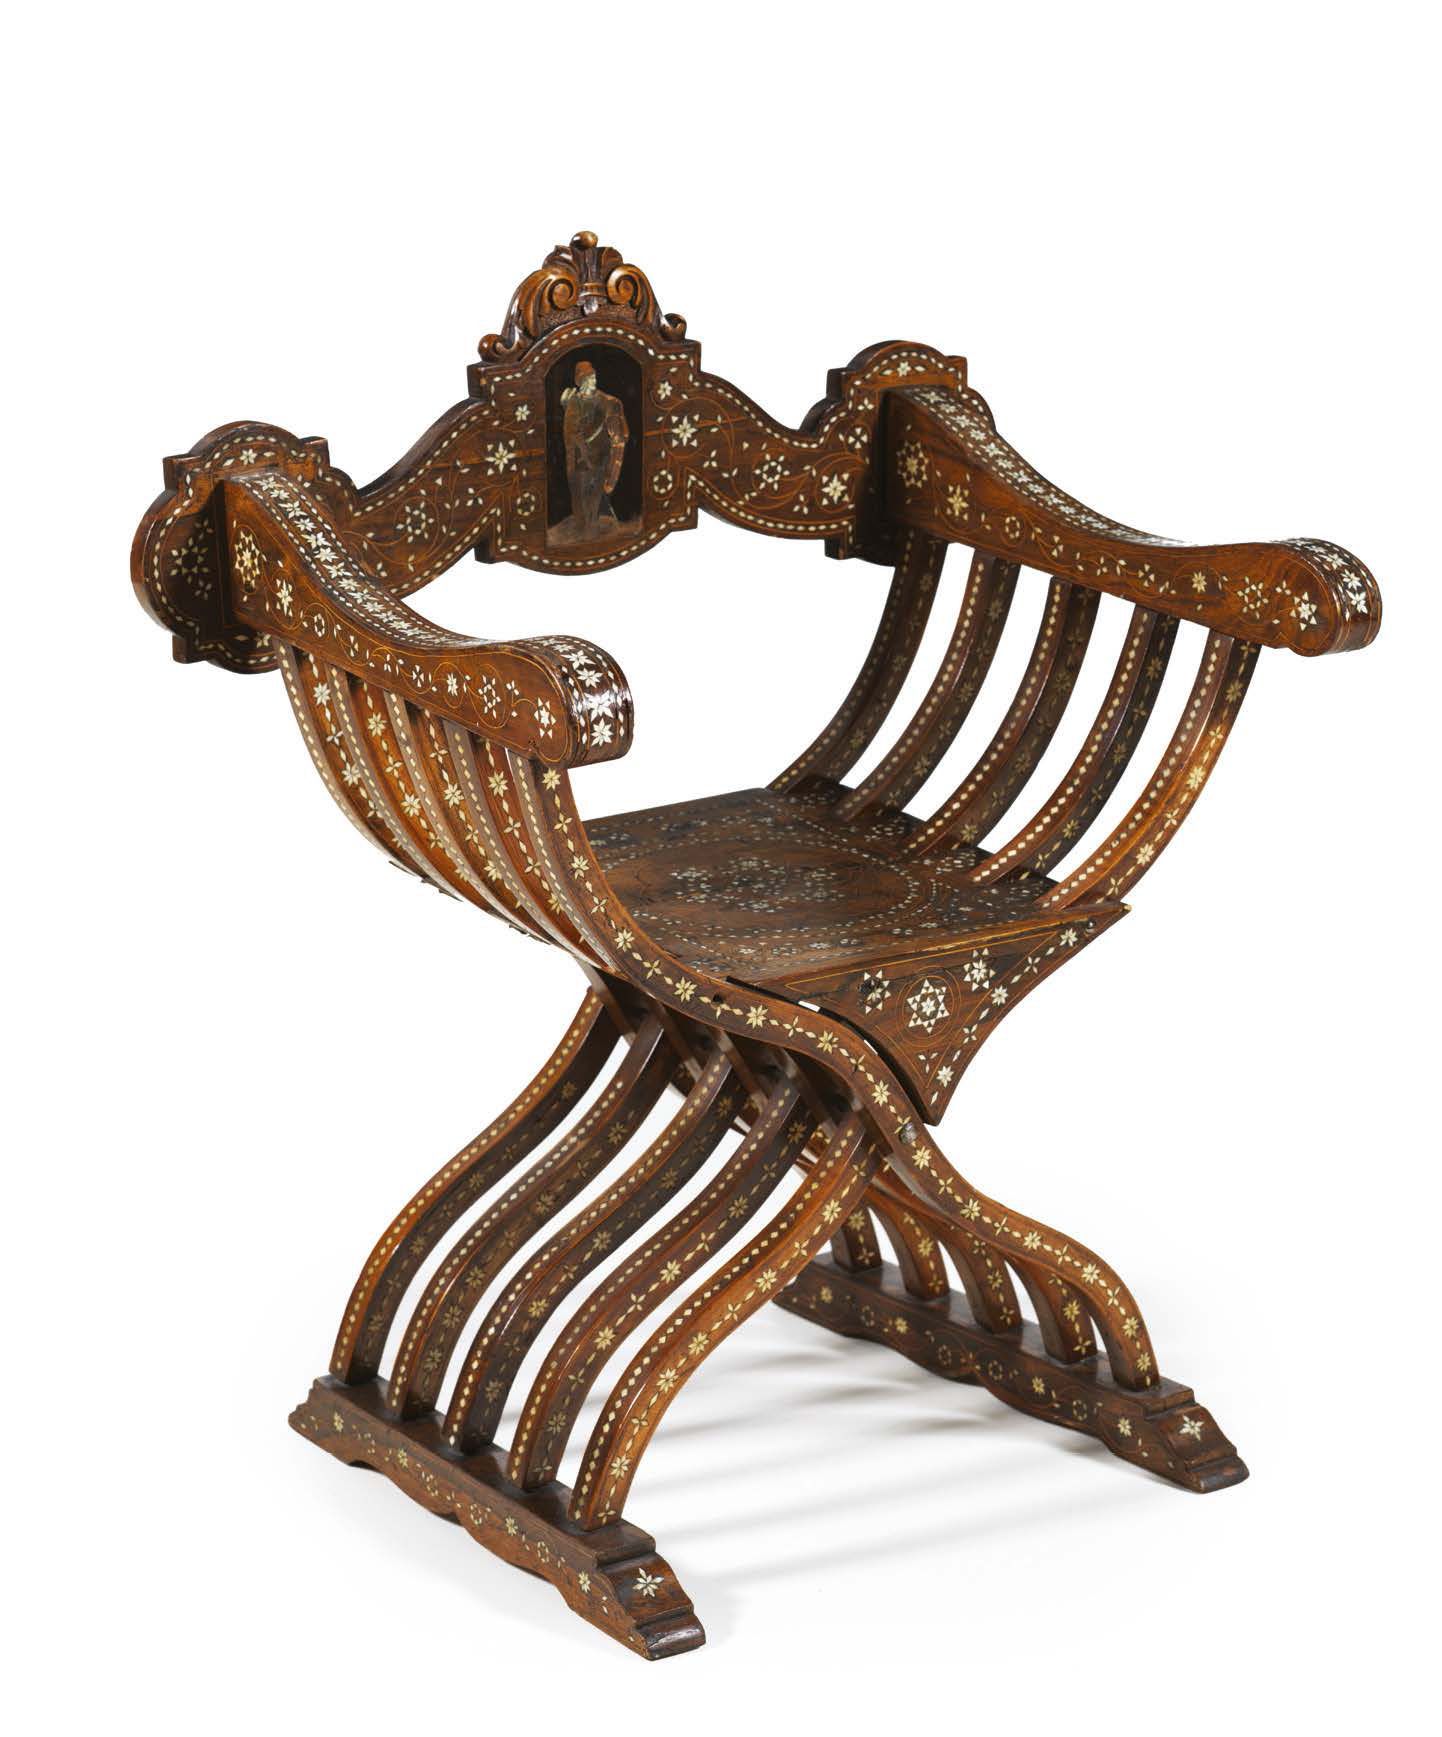 Null 意大利扶手椅。木头上镶嵌着象牙、骨和乌木。弯曲的形状，东方风格的装饰，它的靠背中央有一个黑底的站立人物的装饰，拿着一把剑。
意大利，19世纪。
H_9&hellip;